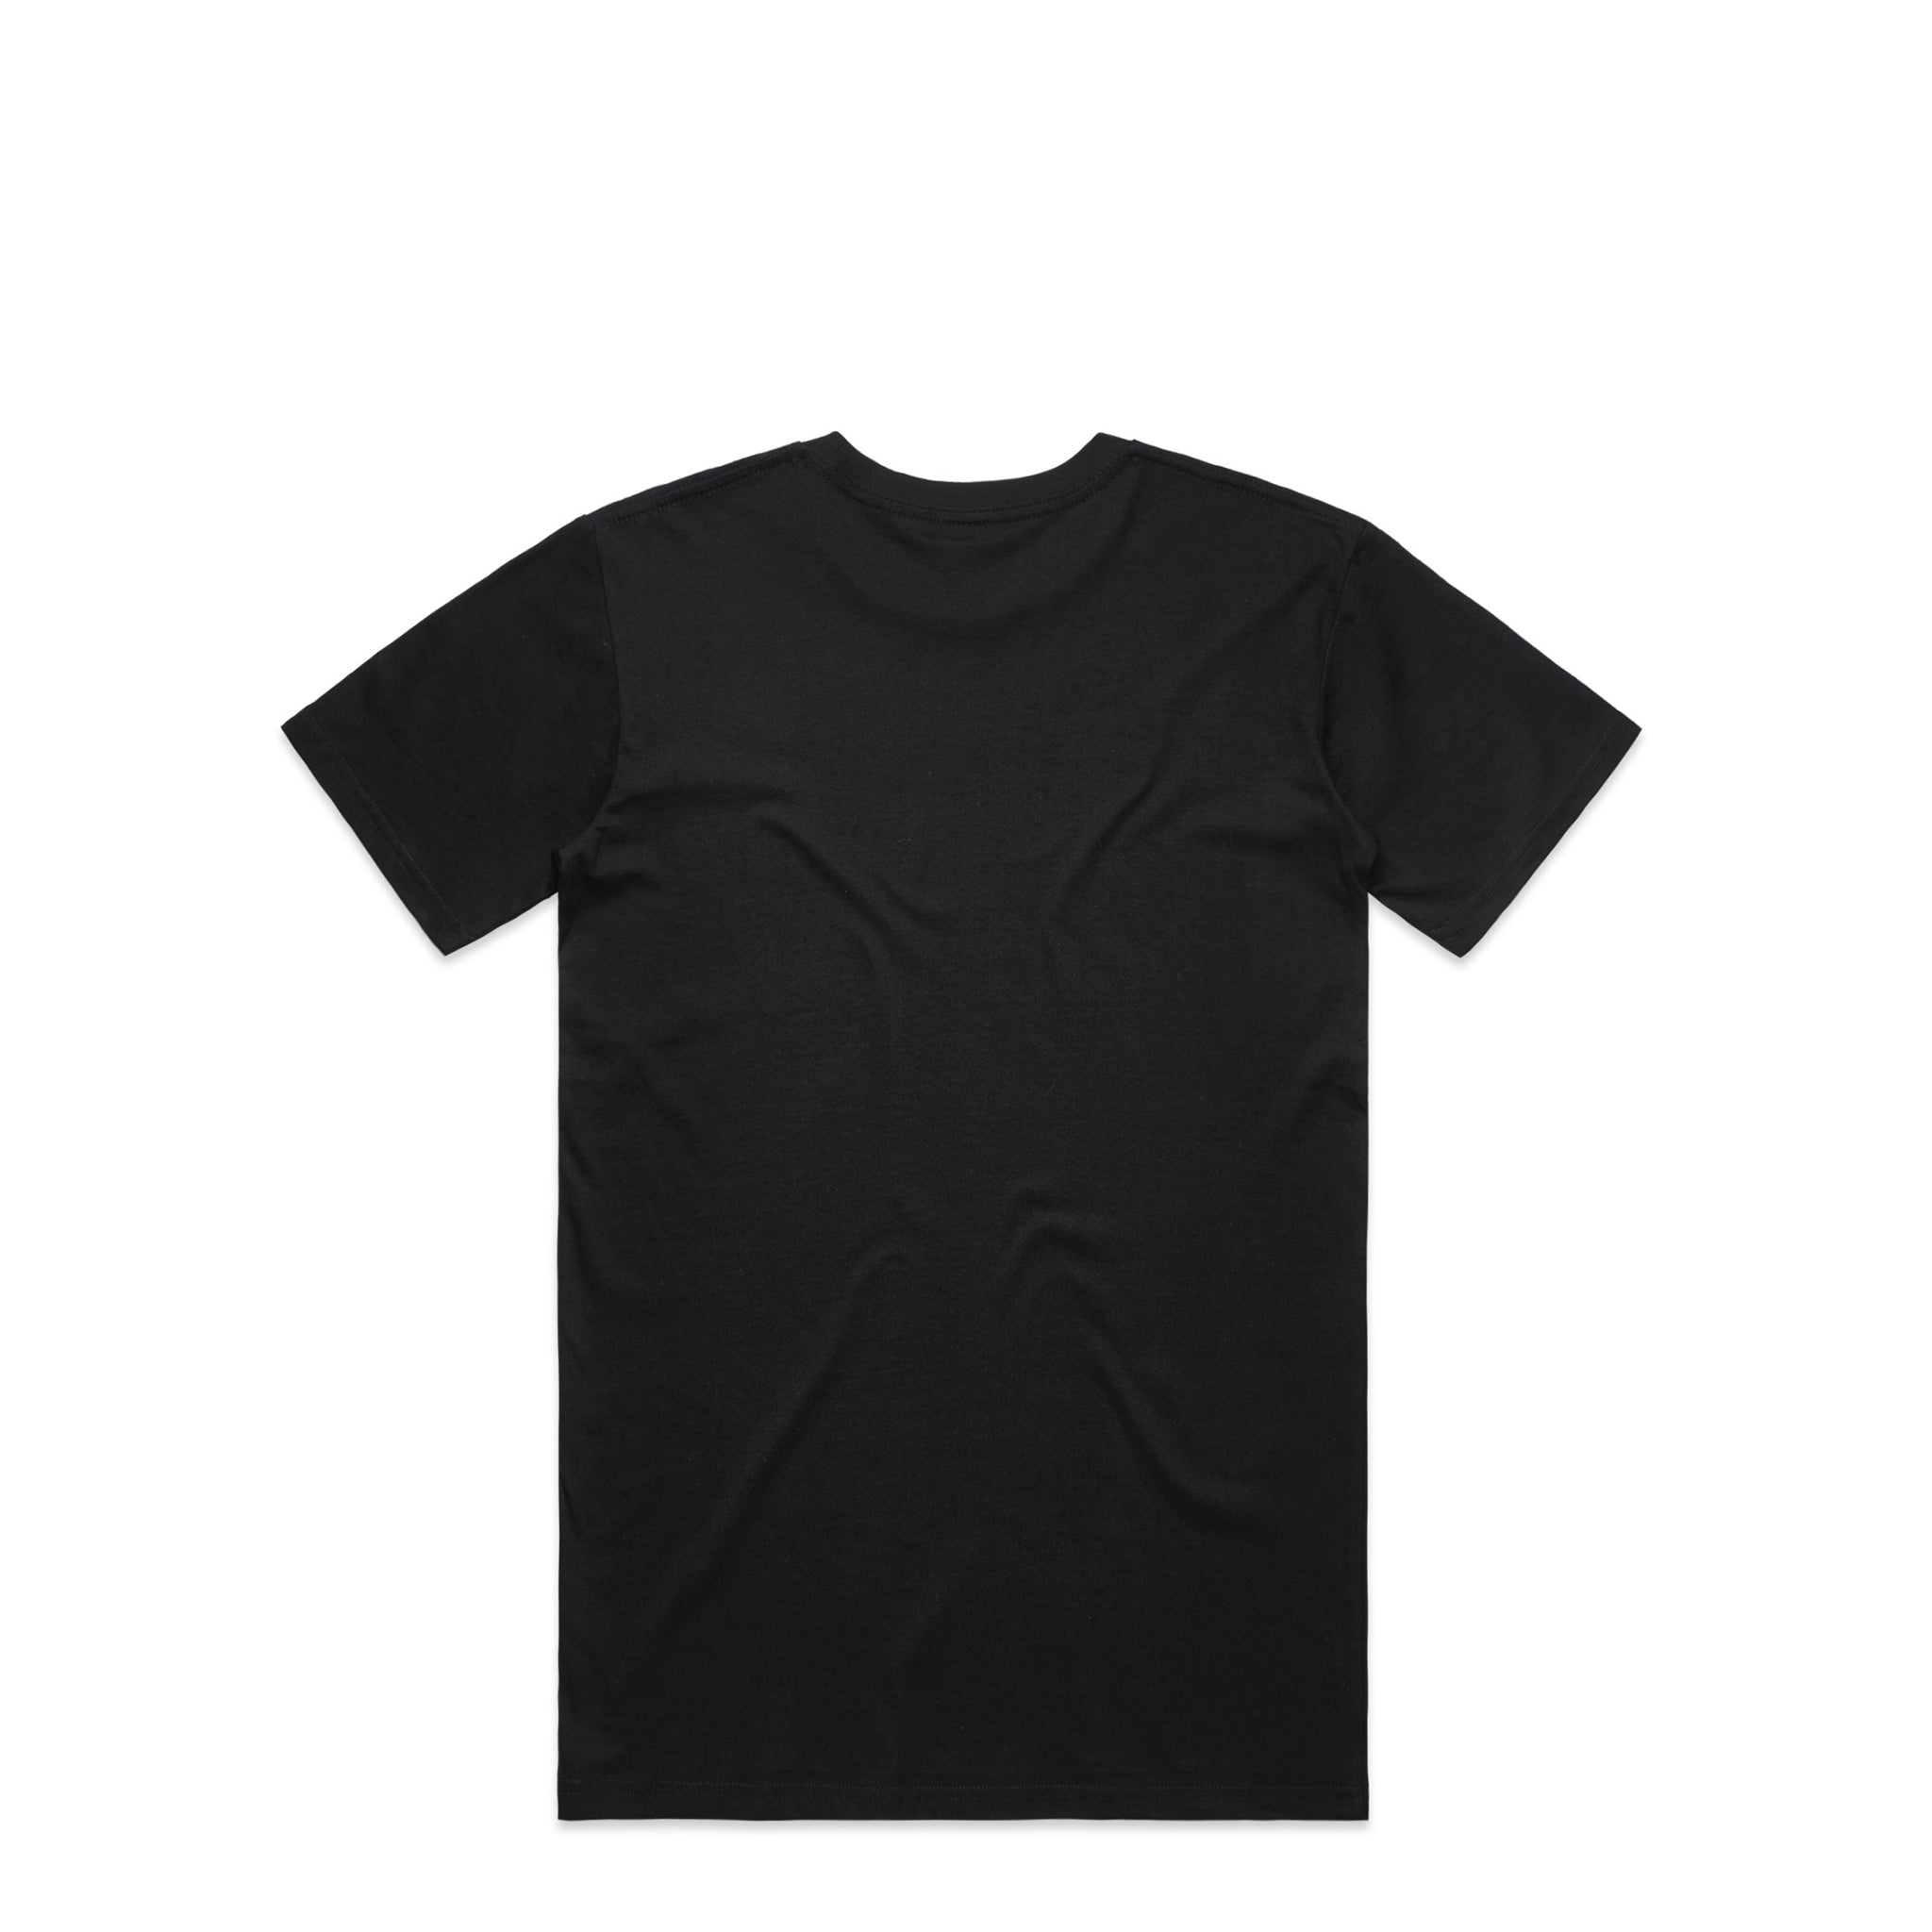 Rockstar Orange Roundel T-Shirt – Black